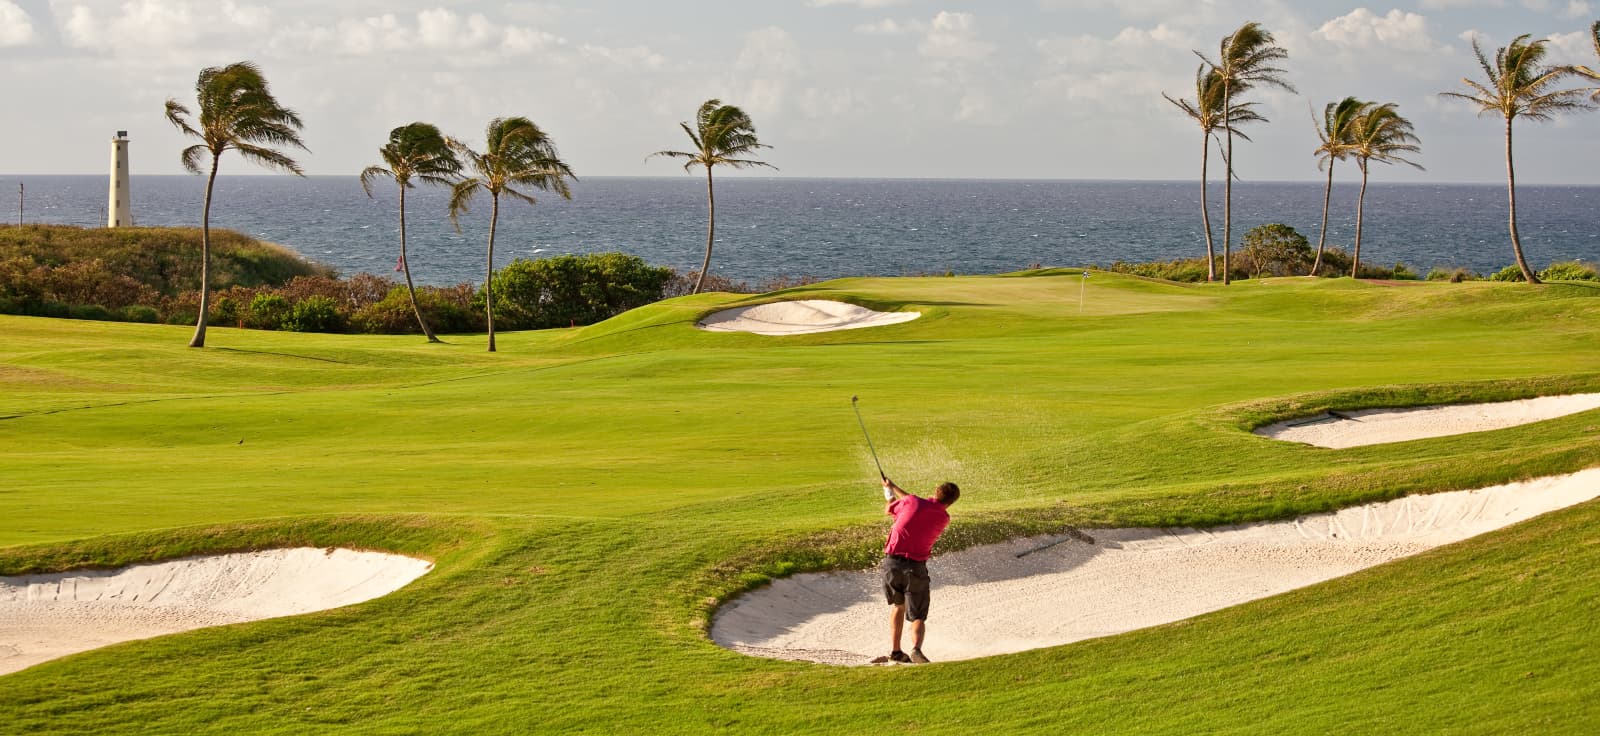 A generic golf course shot in Hawaii overlooking the ocean